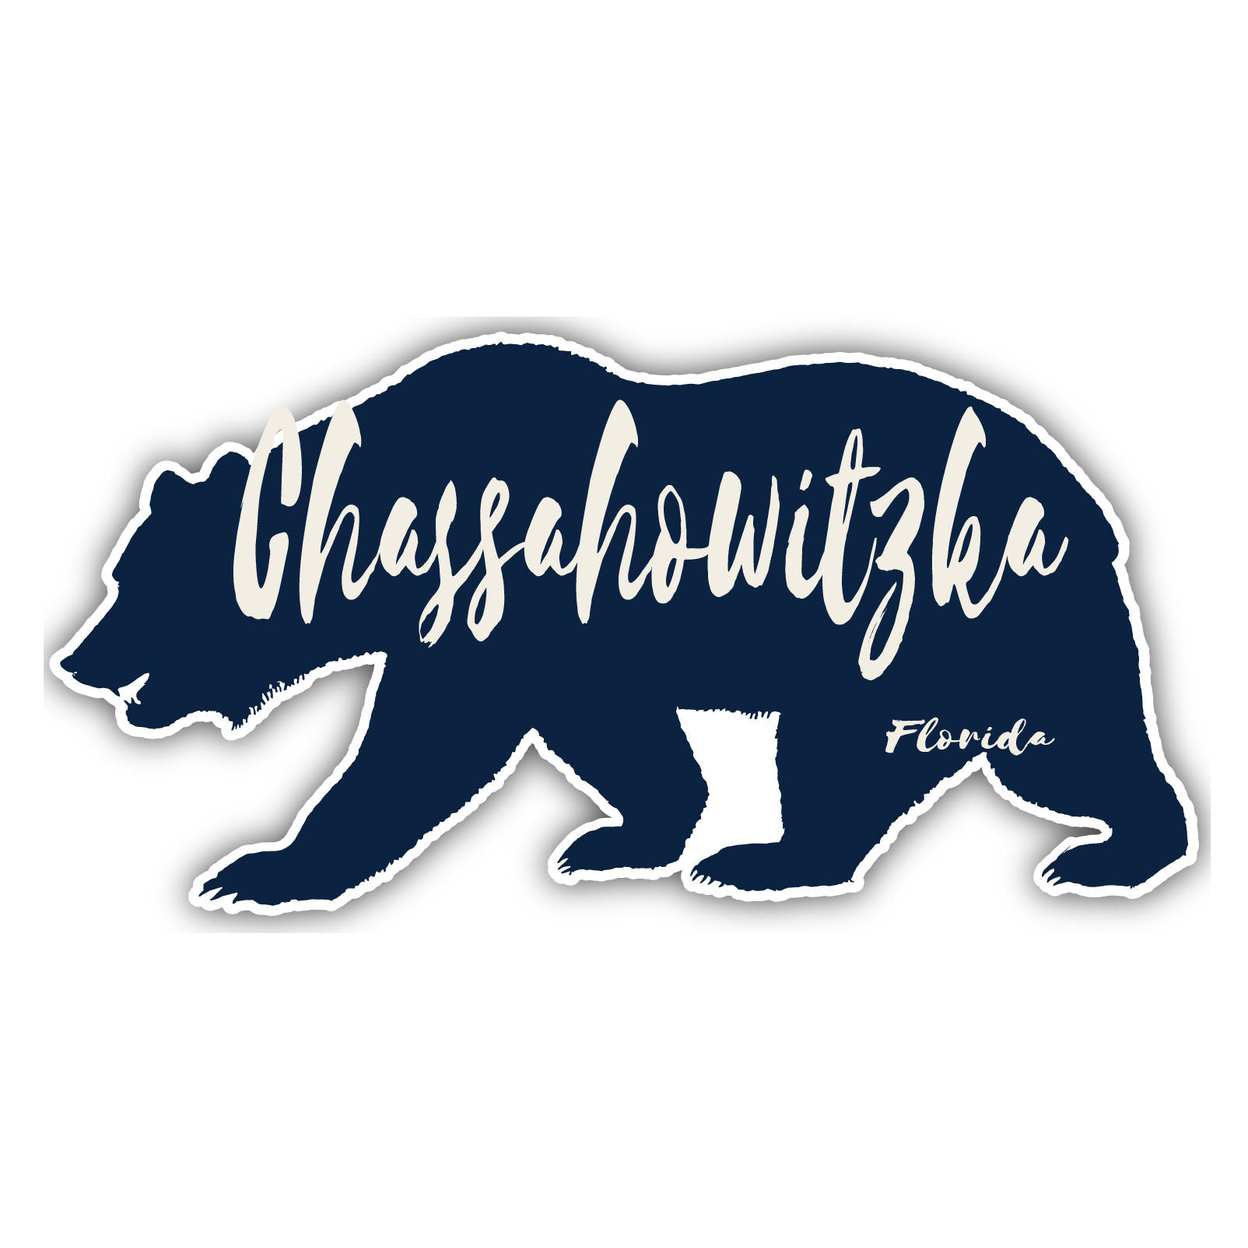 Chassahowitzka Florida Souvenir Decorative Stickers (Choose Theme And Size) - Single Unit, 4-Inch, Bear